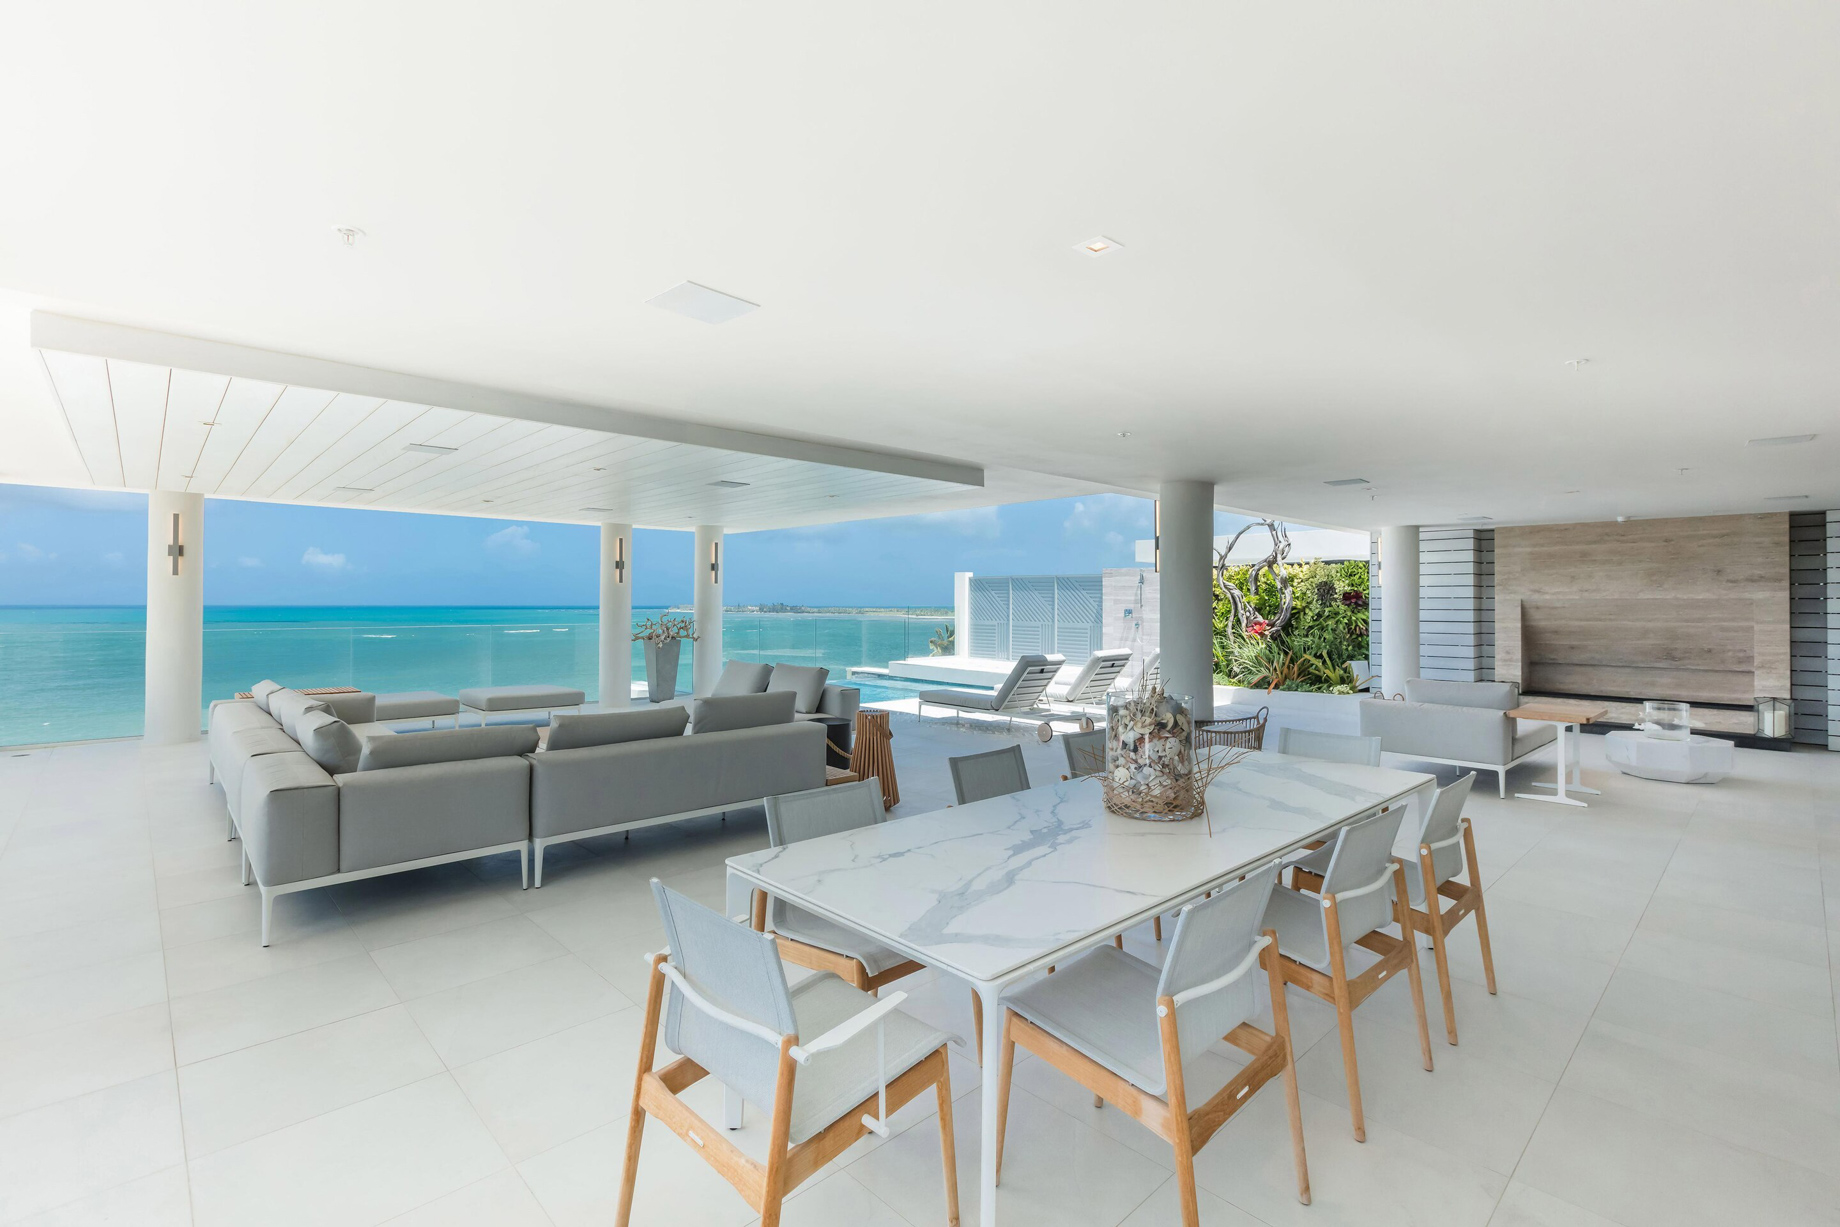 The St. Regis Bahia Beach Resort – Rio Grande, Puerto Rico – Ocean Drive Residences Penthouse Ocean Views